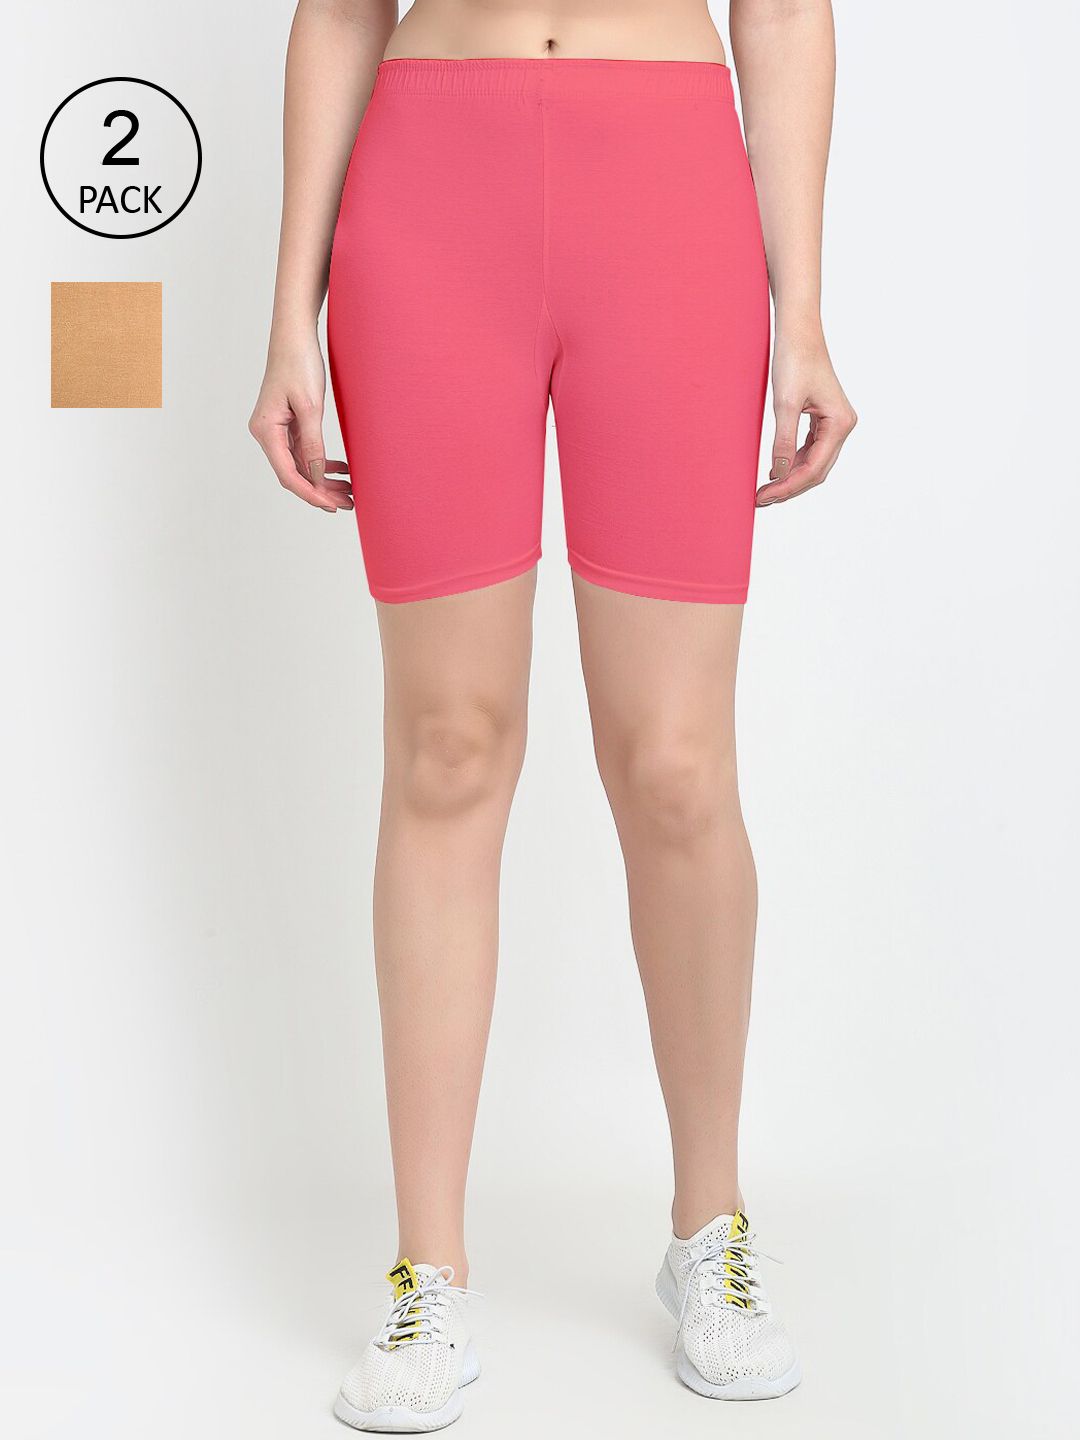 GRACIT Women Set Of 2 Beige & Pink Biker Shorts Price in India